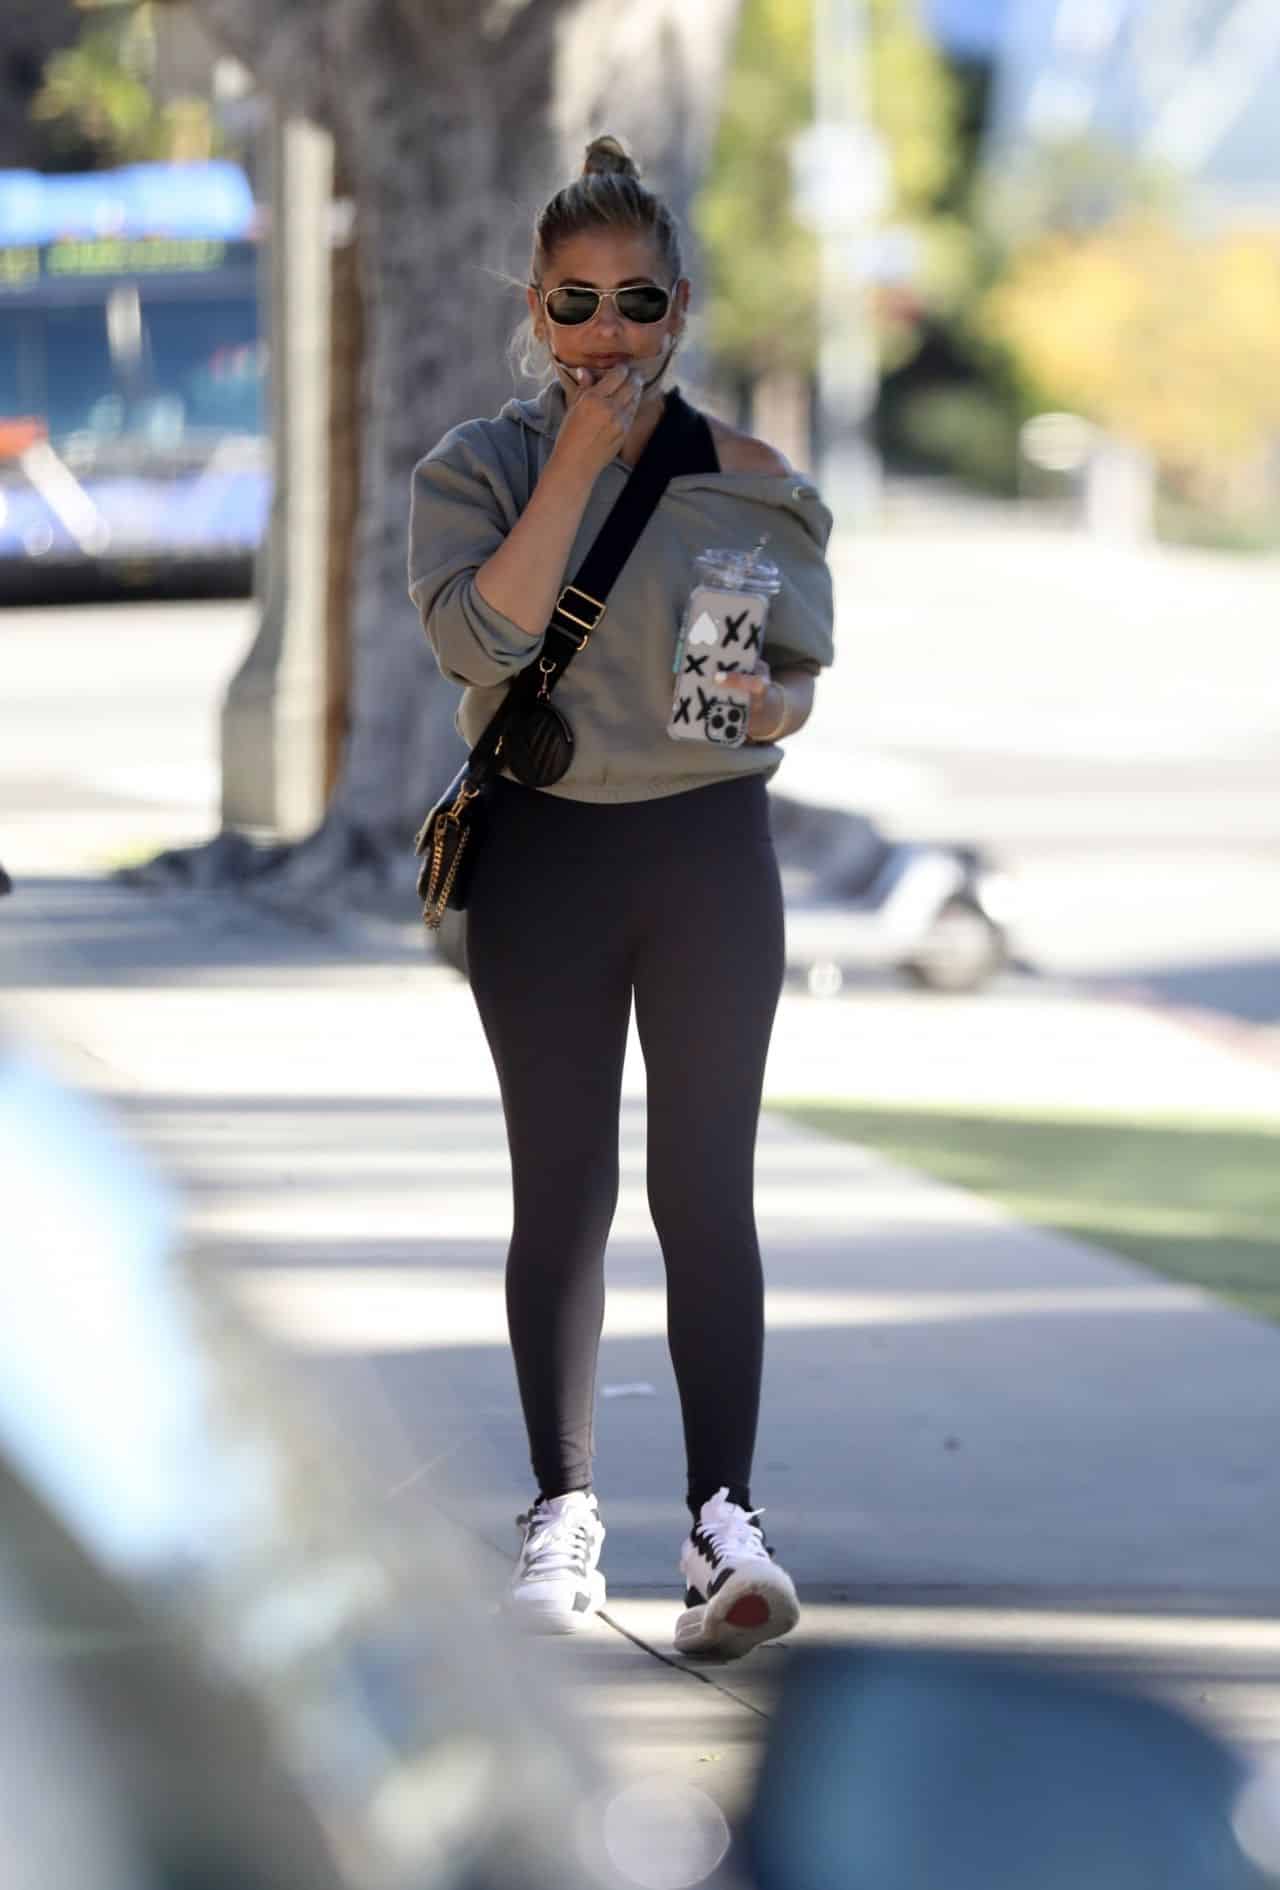 Sarah Michelle Gellar in Black Spandex Leggings Leaving the Yoga Class